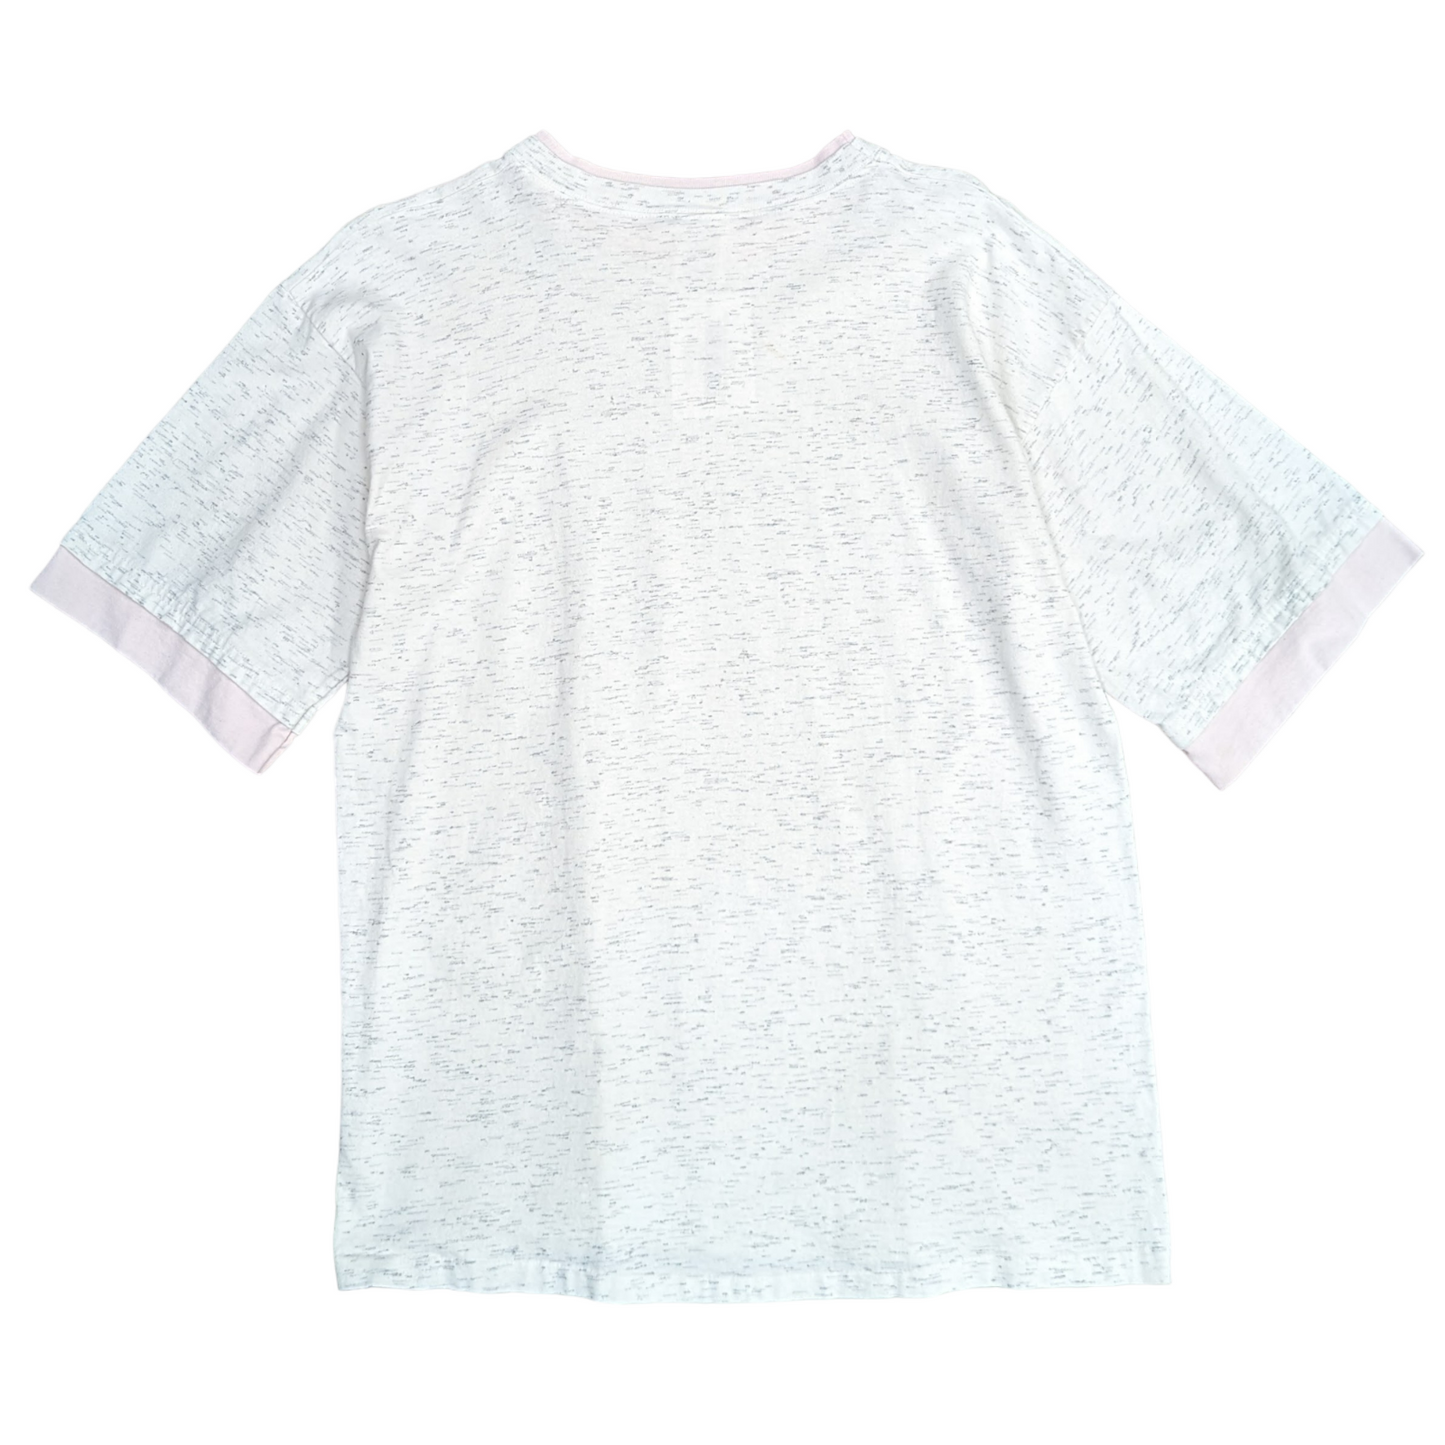 90s Single Stitch Wildflower T-Shirt Size L